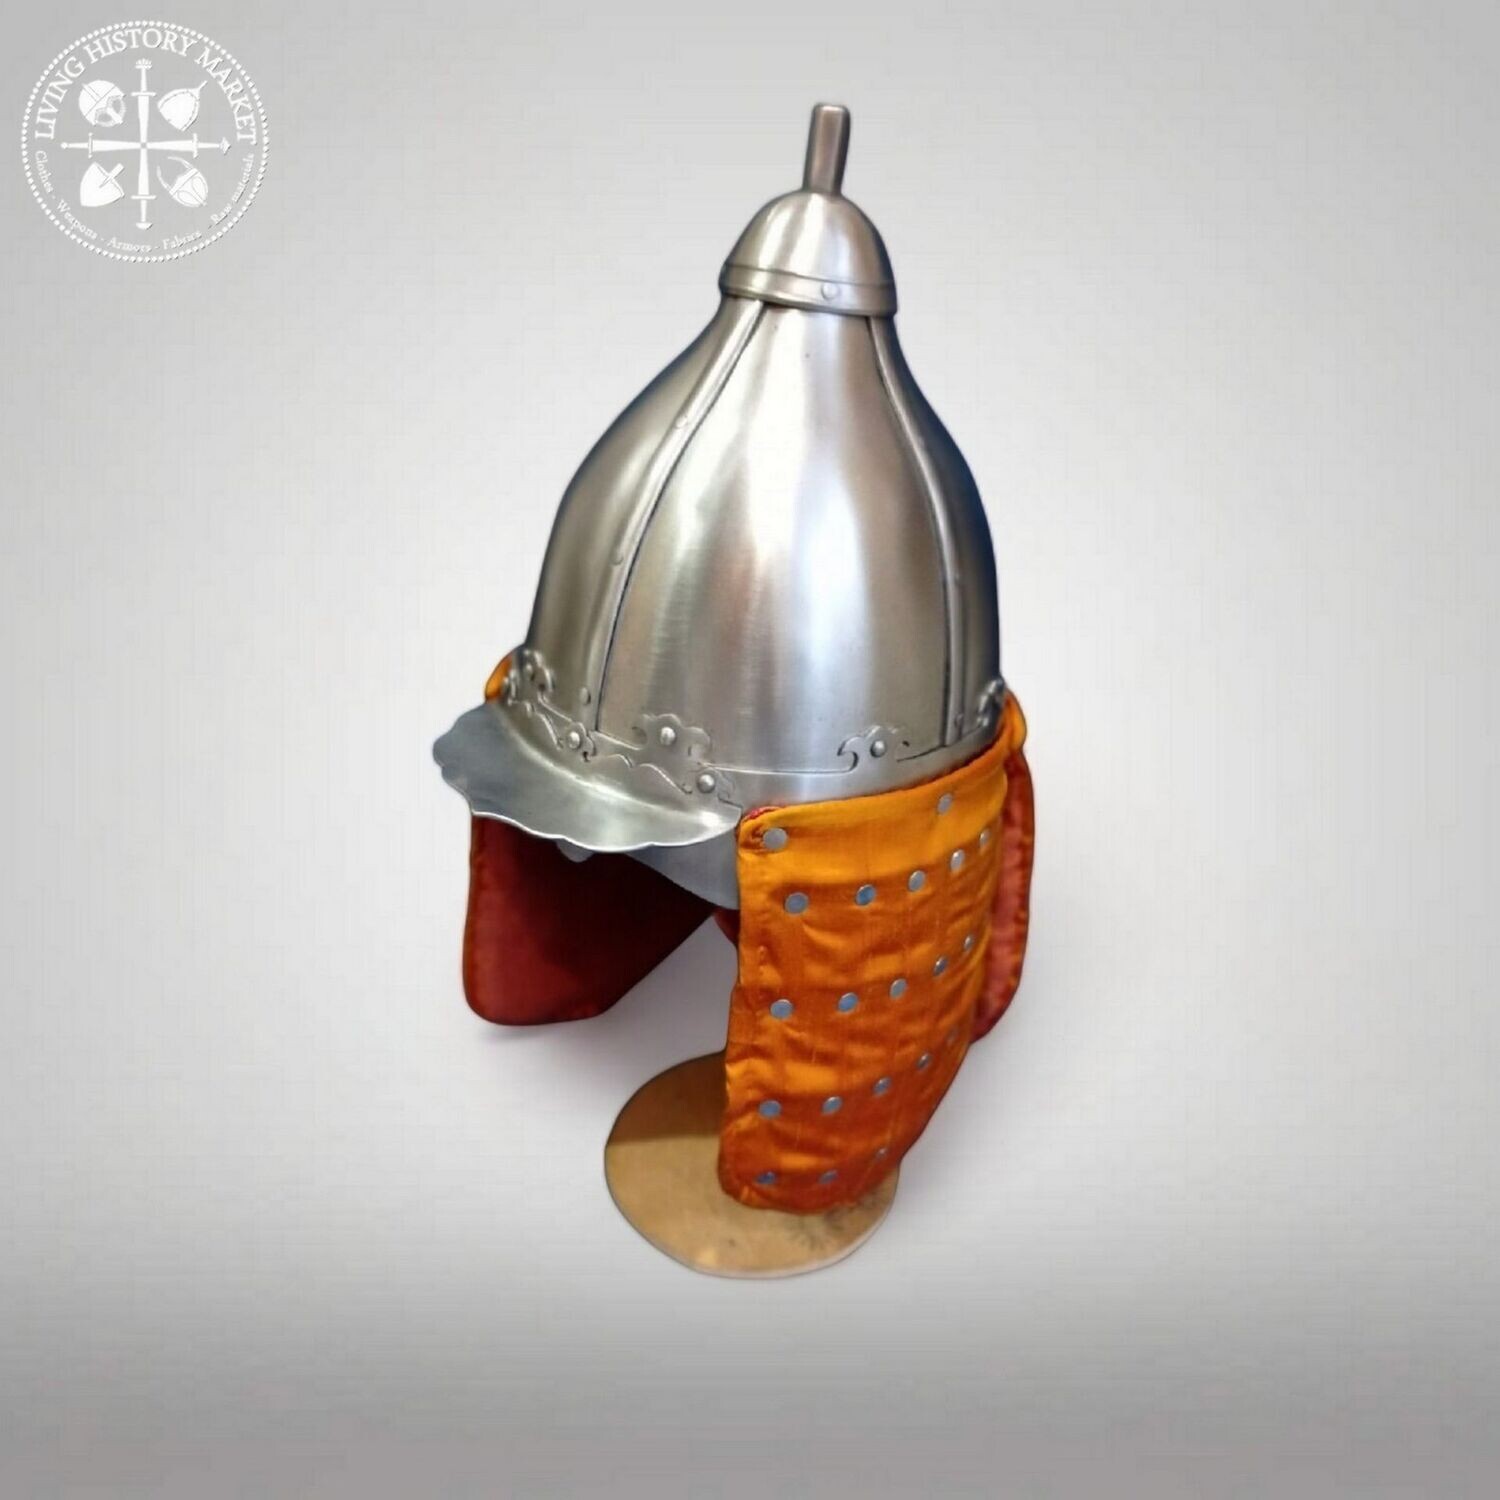 Korean helmet - 16th century